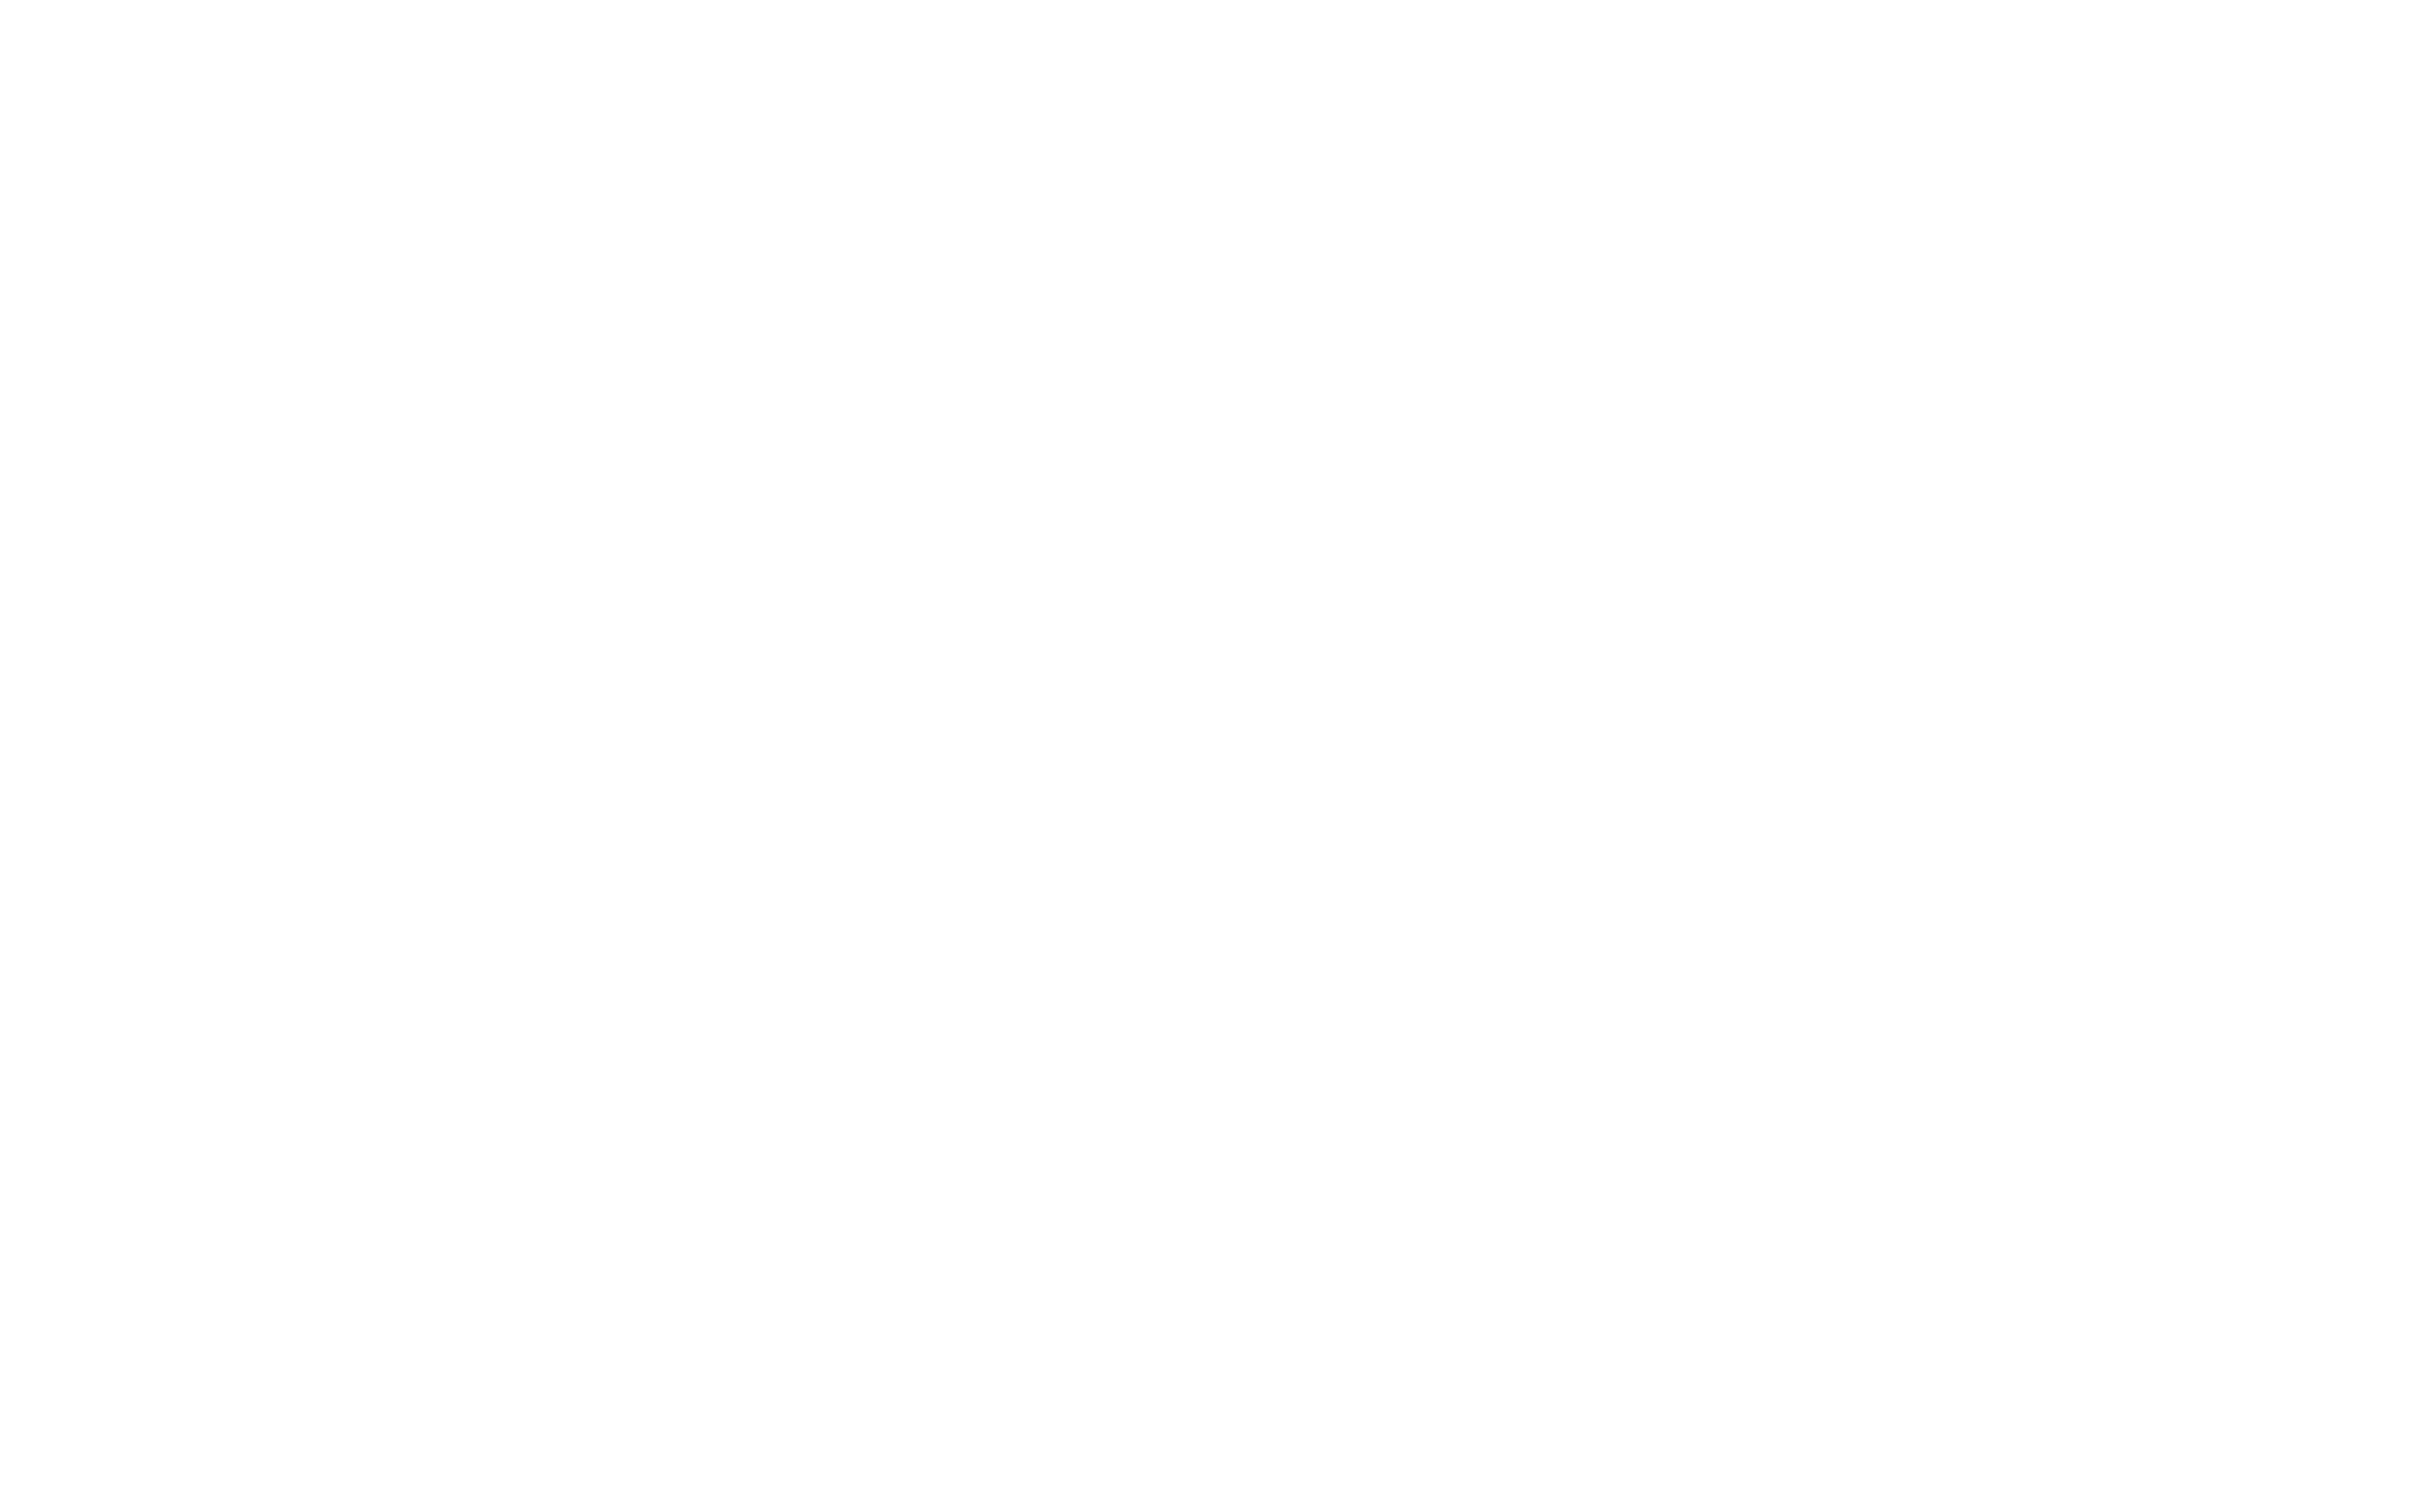 Capstone HigherEd Services, LLC